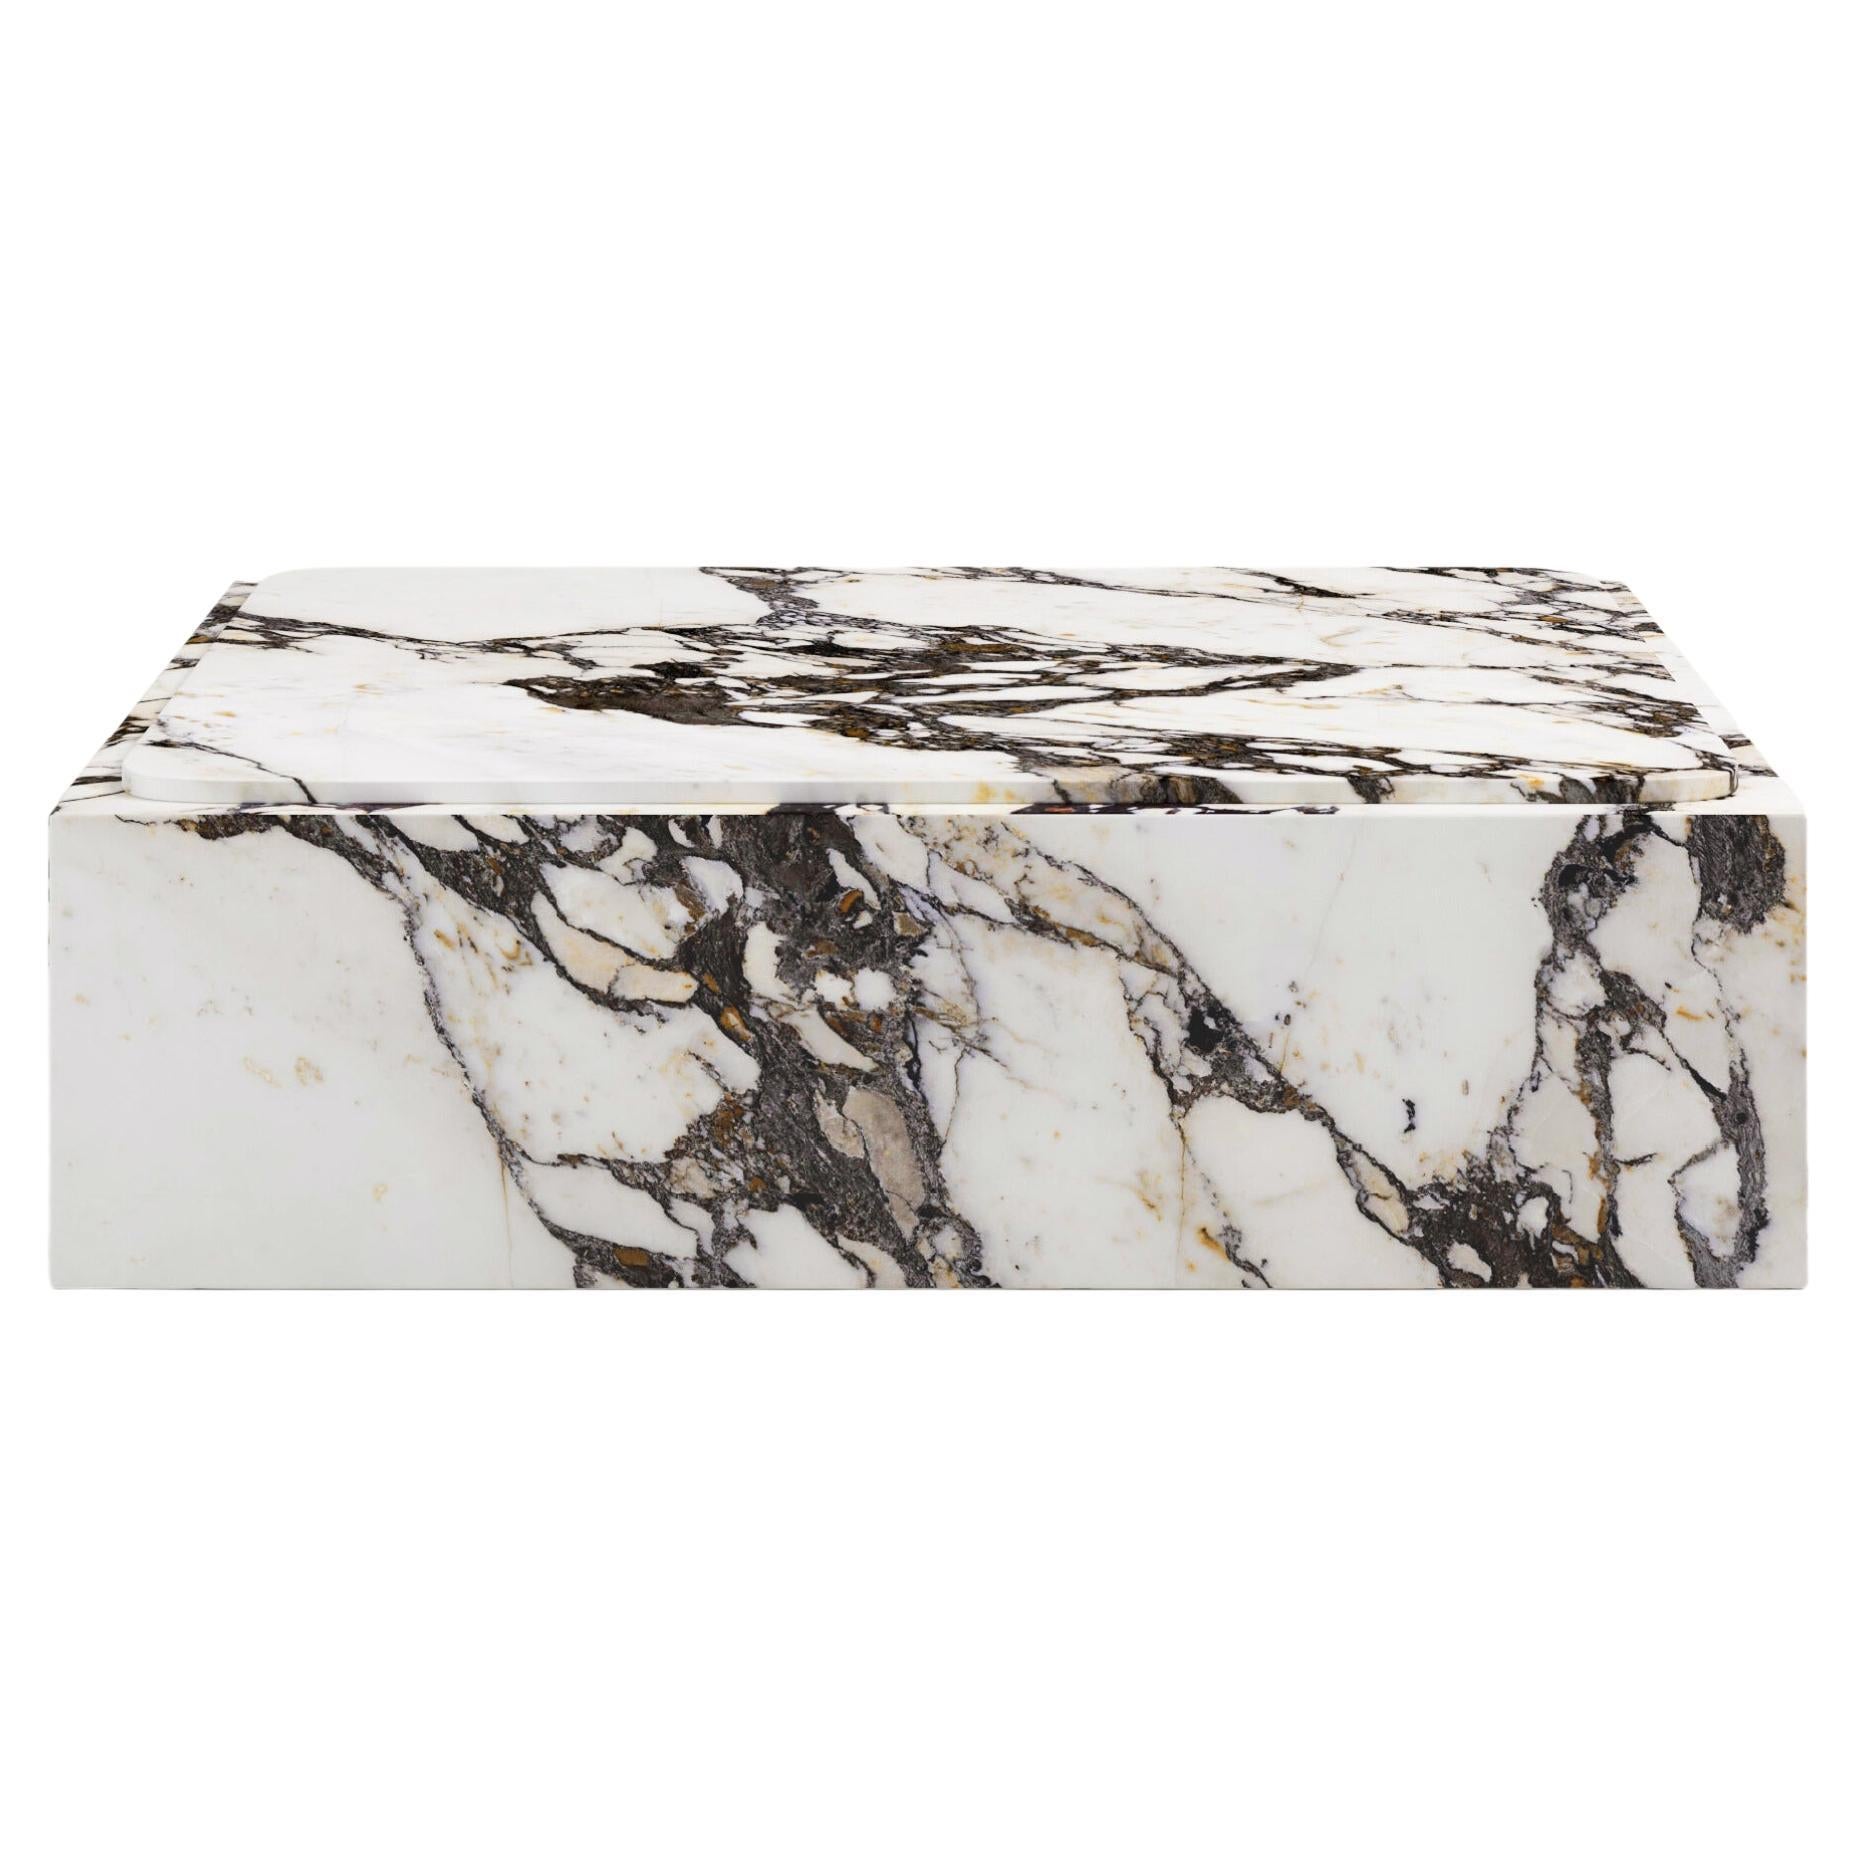 FORM(LA) Cubo Square Plinth Coffee Table 42”L x 42"W x 13”H Calacatta Marble For Sale